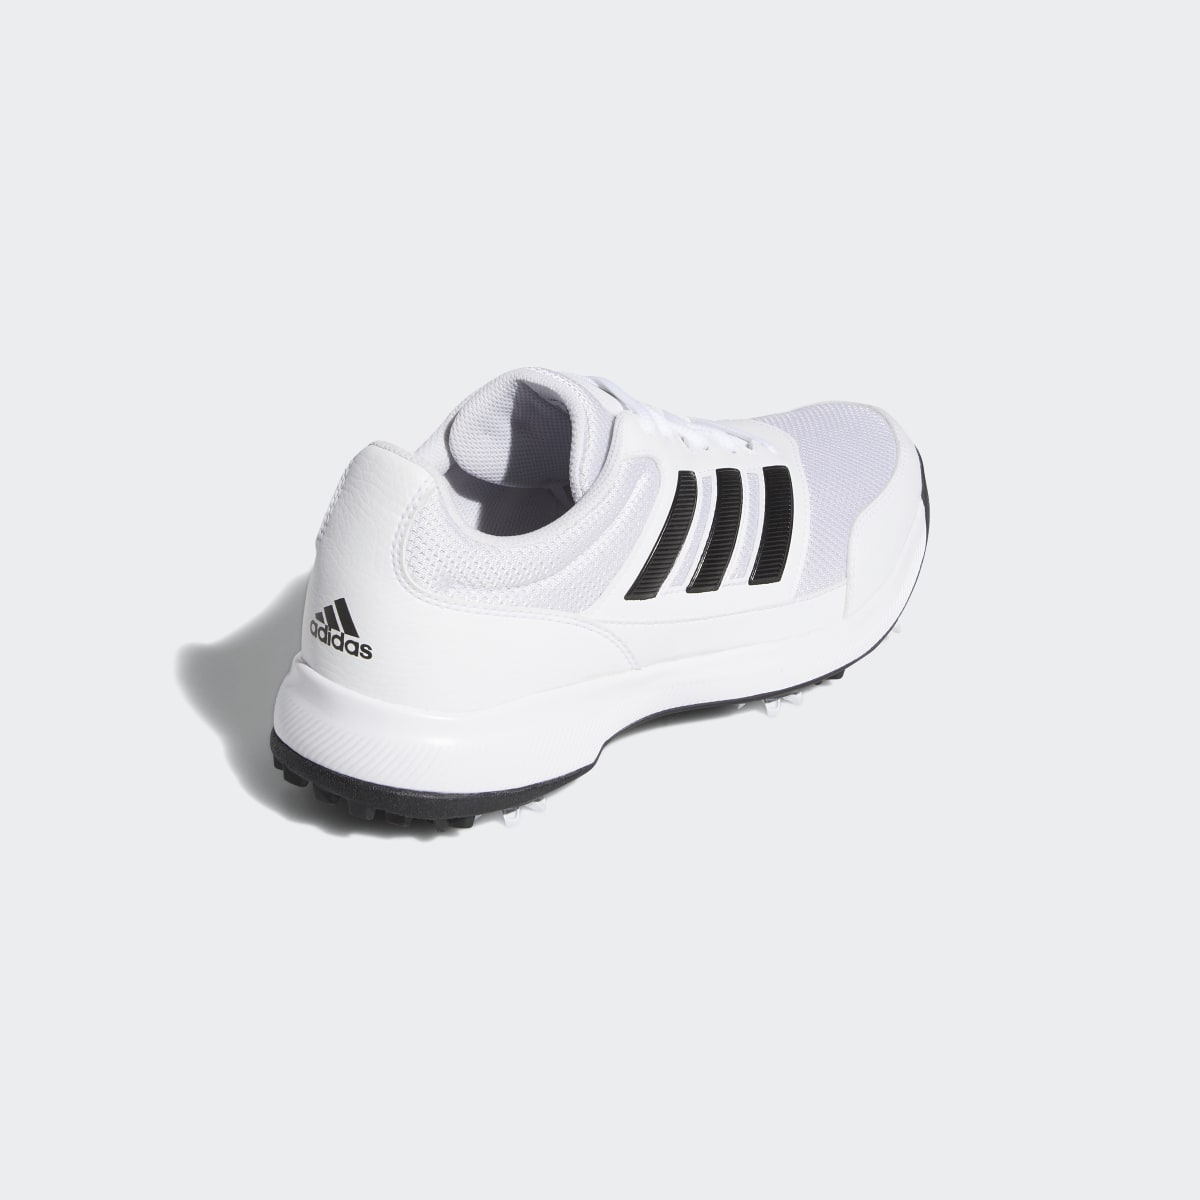 Adidas Tech Response 2.0 Golf Shoes. 7